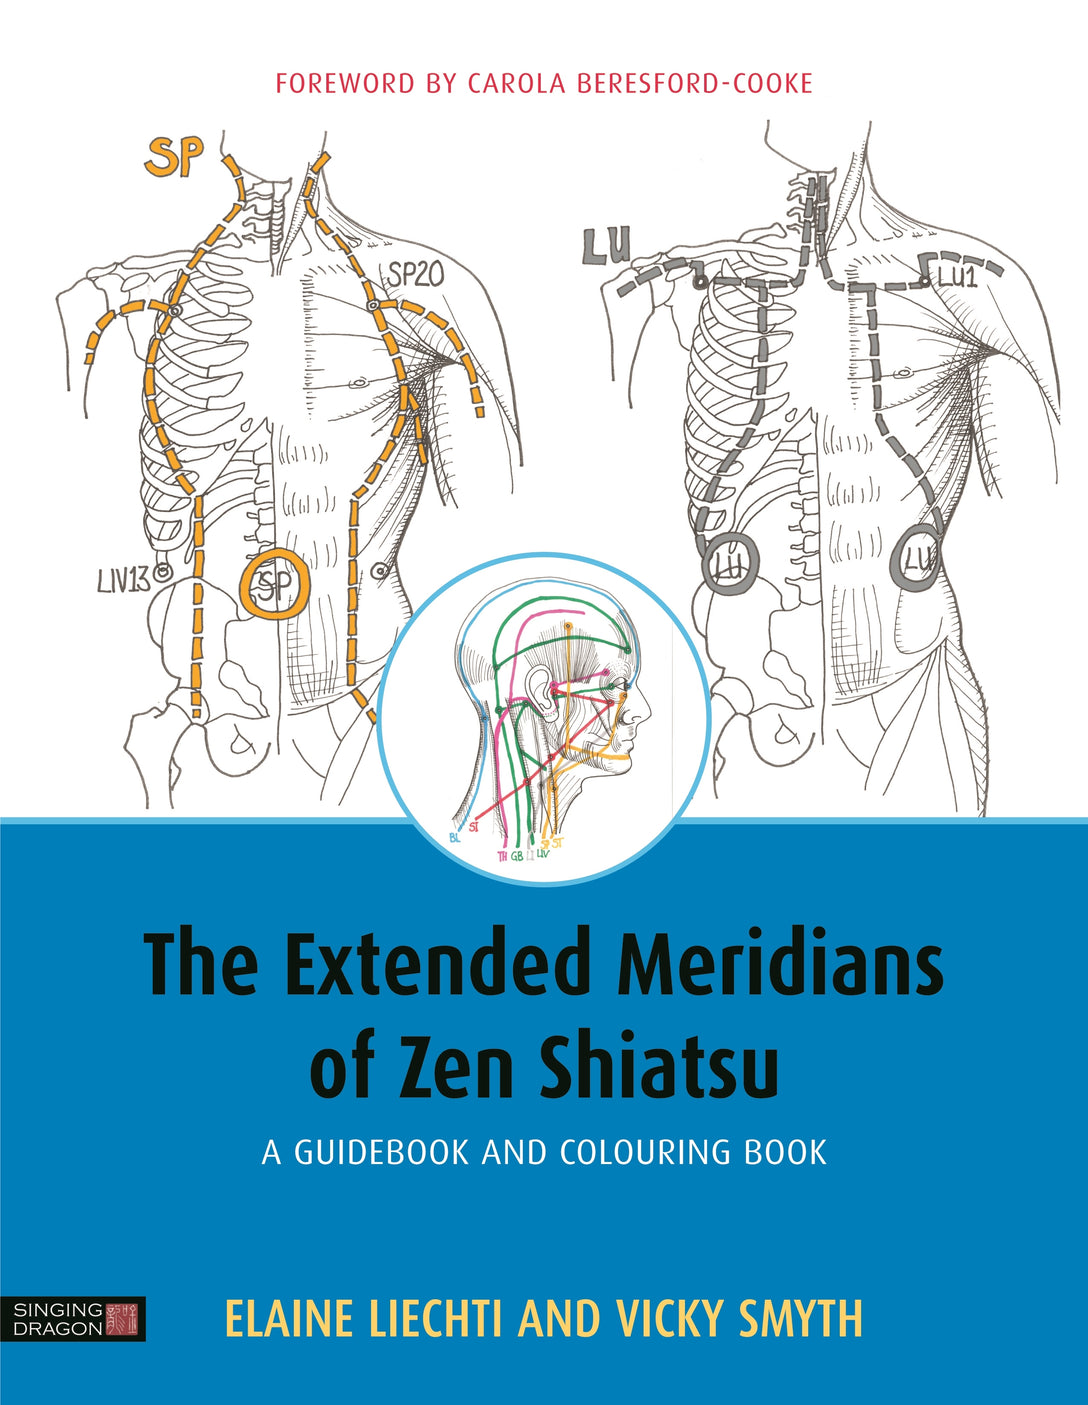 The Extended Meridians of Zen Shiatsu by Elaine Liechti, Vicky Smyth, Carola Beresford-Cooke